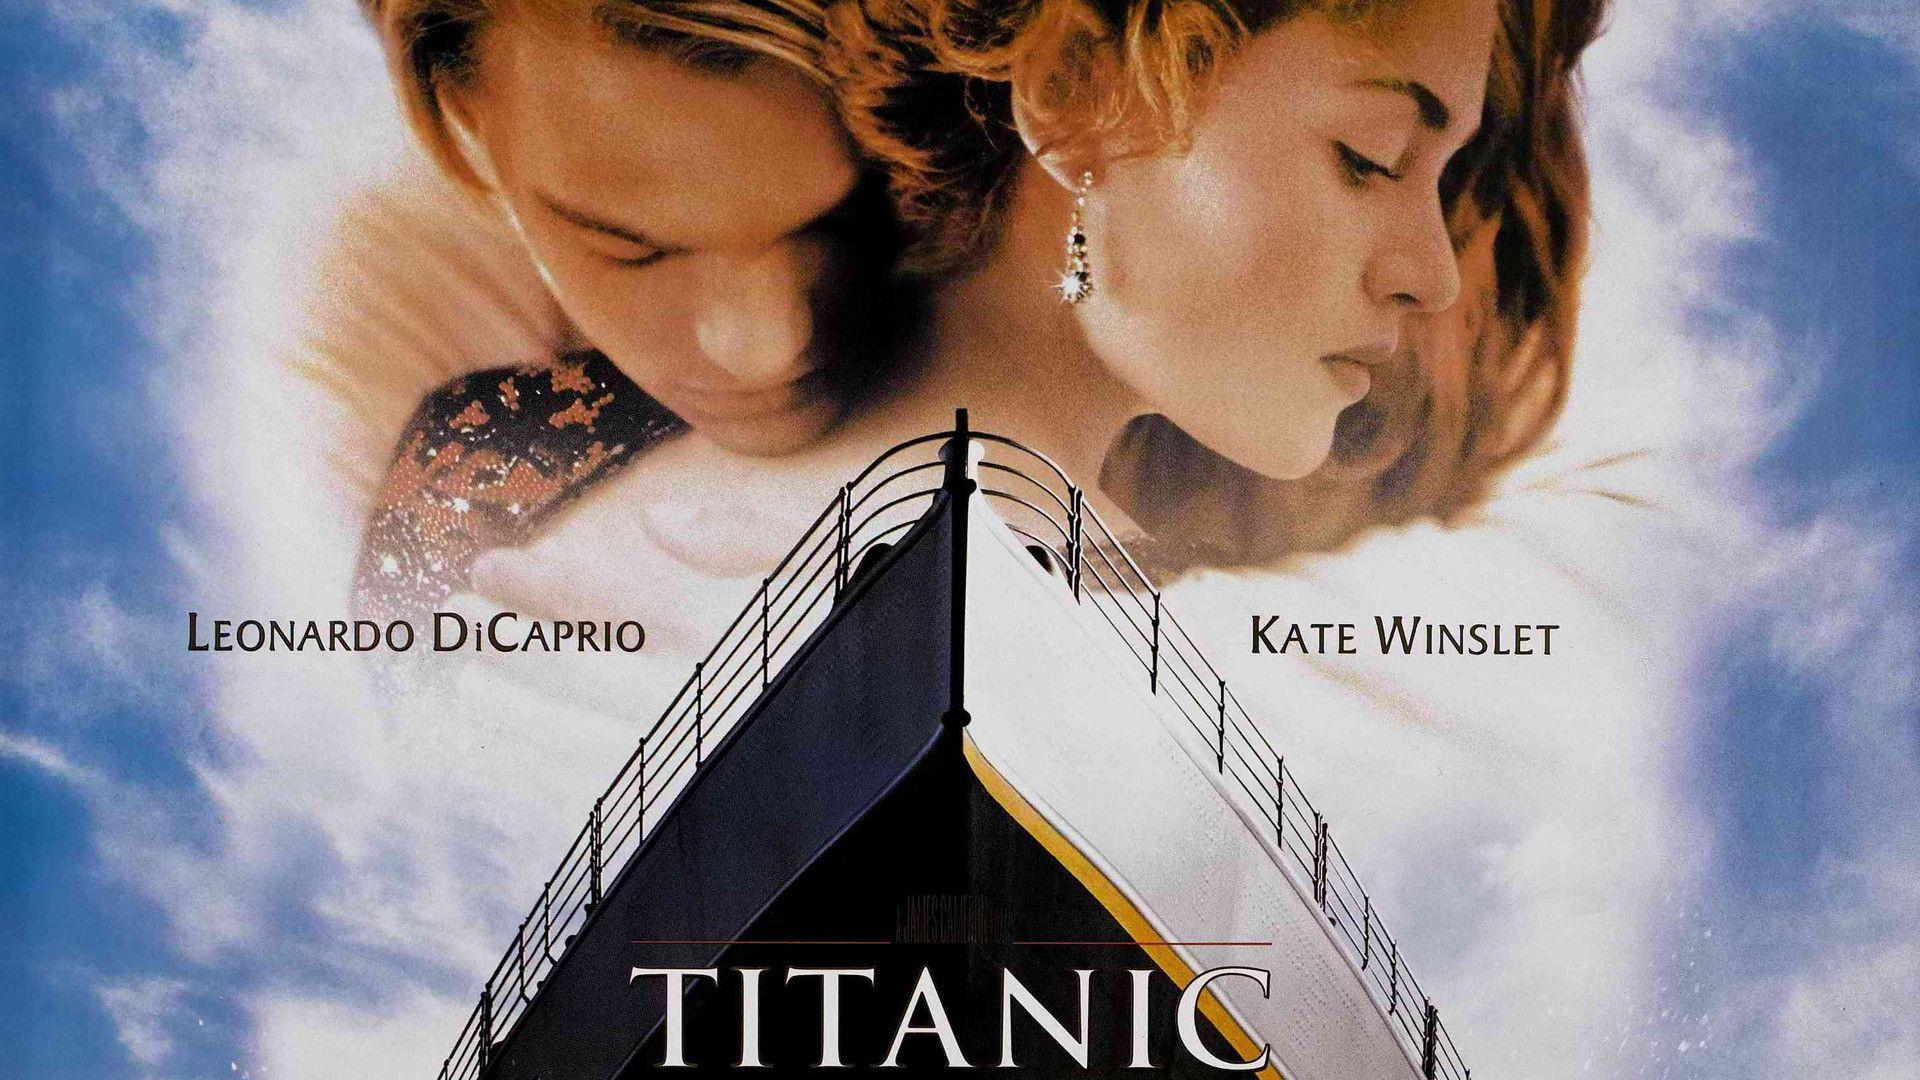 Titanic Movie Wallpaper background picture